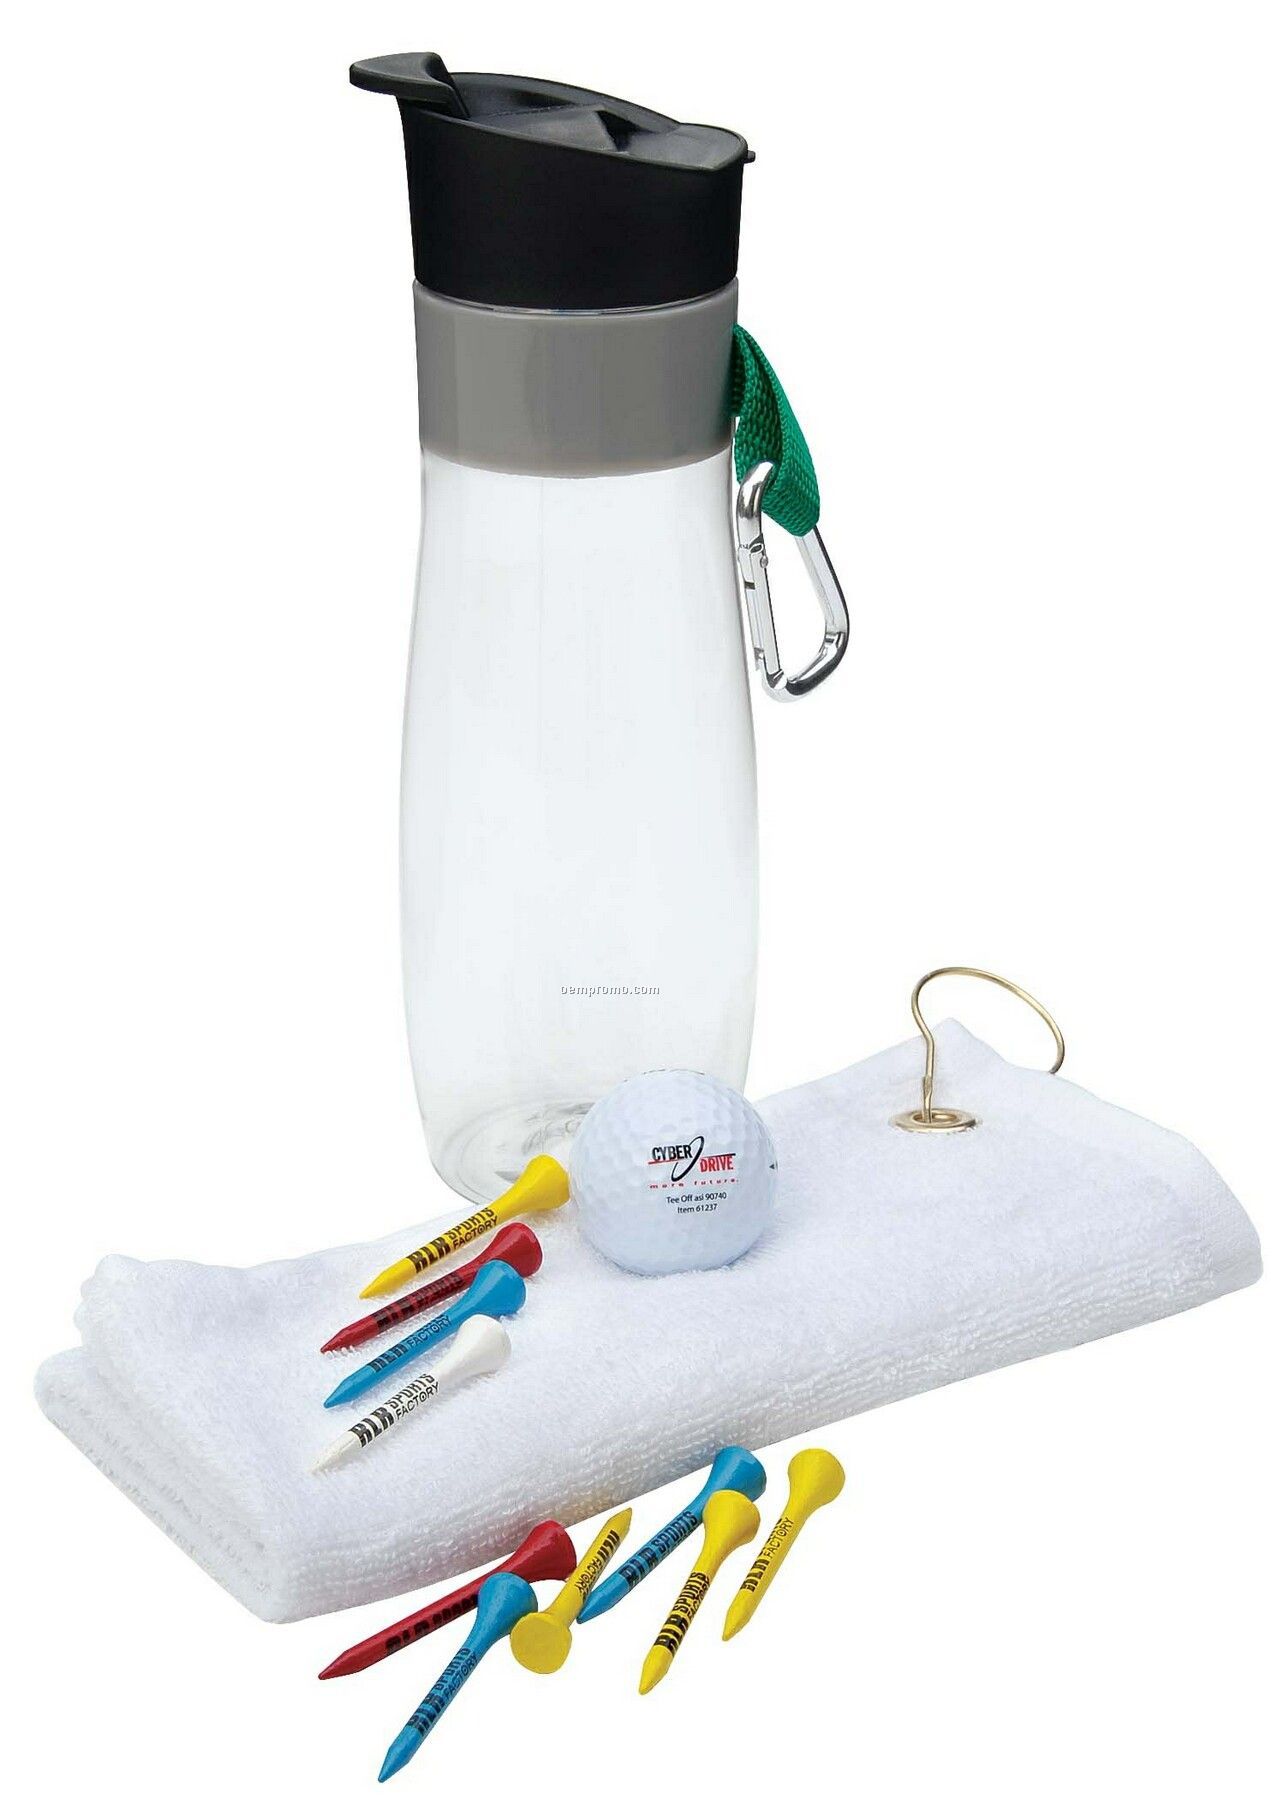 Vista Event Bottle, Nike Ndx Heat Golf Ball, Tees And Towel Kit